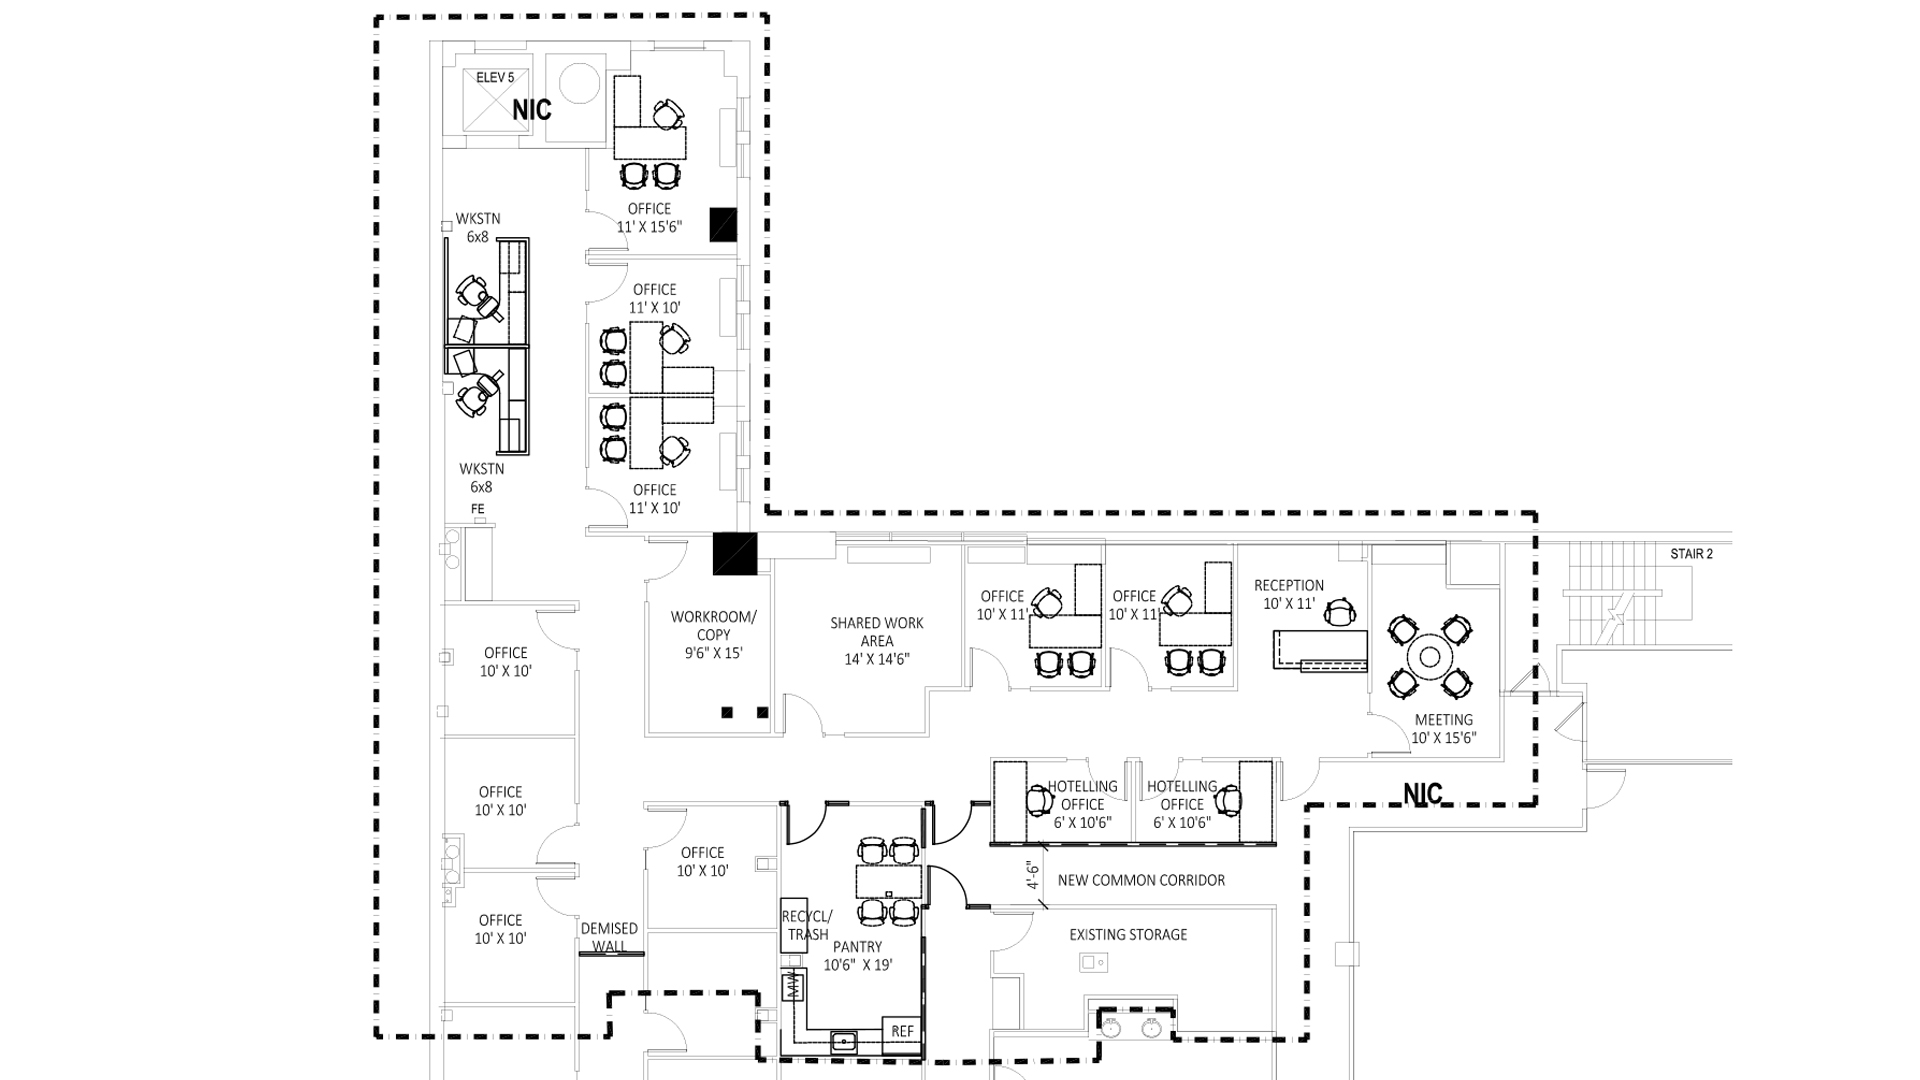 740 15th St NW floor plan